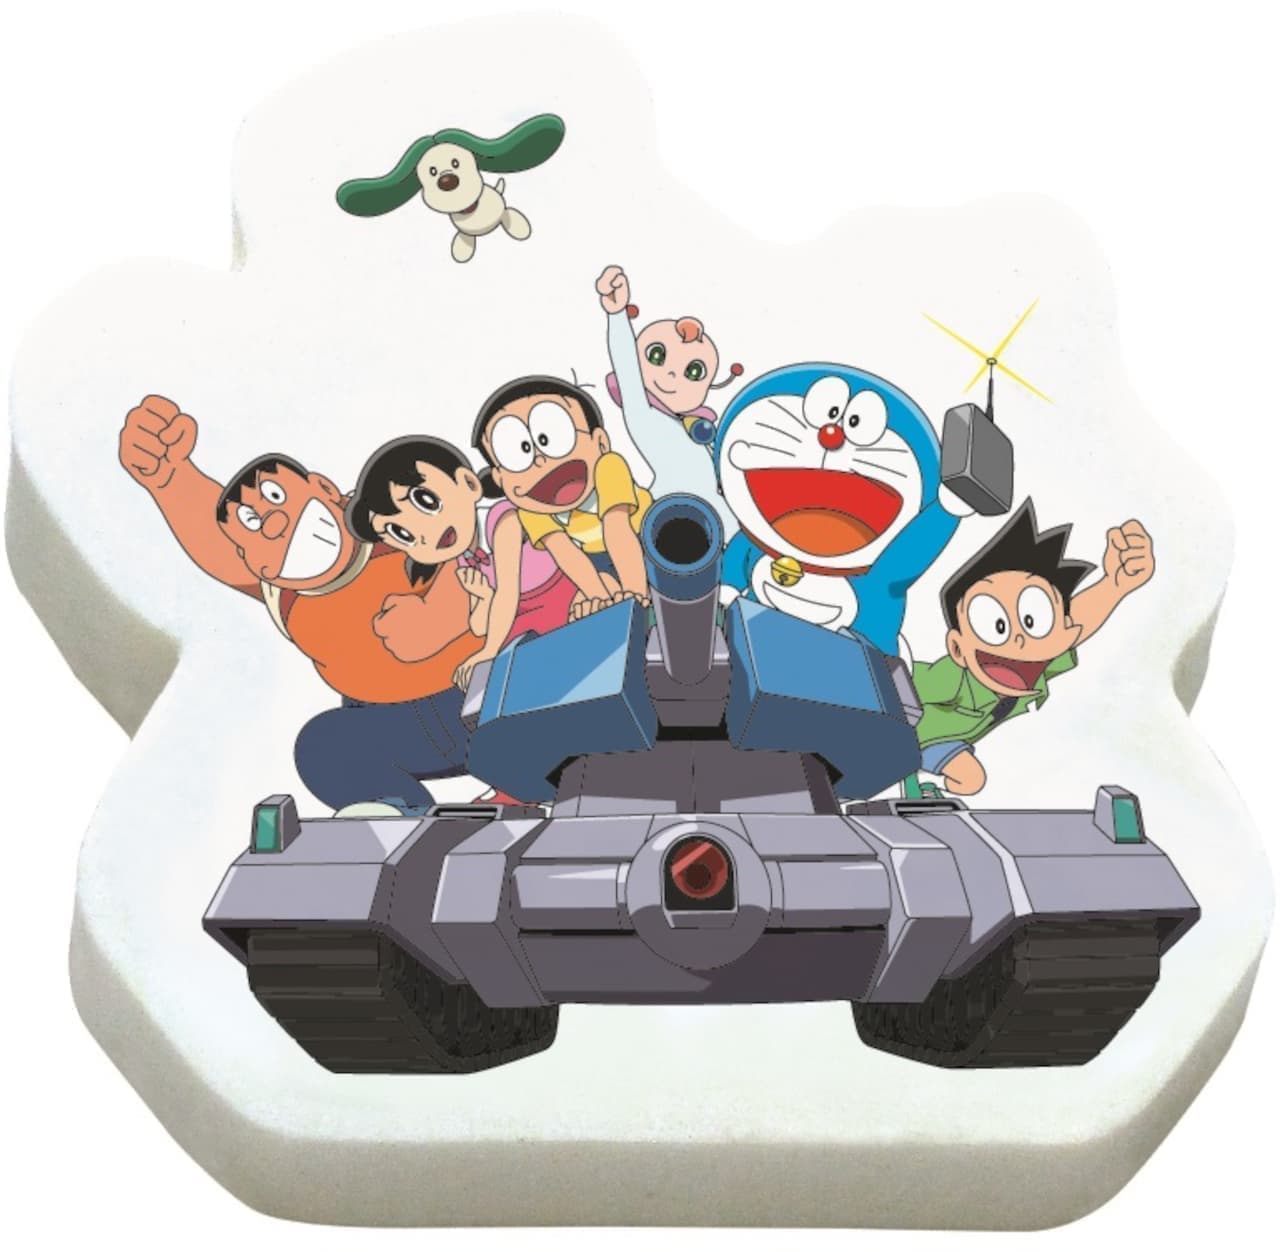 Hottentotto "Doraemon Lunch" original eraser